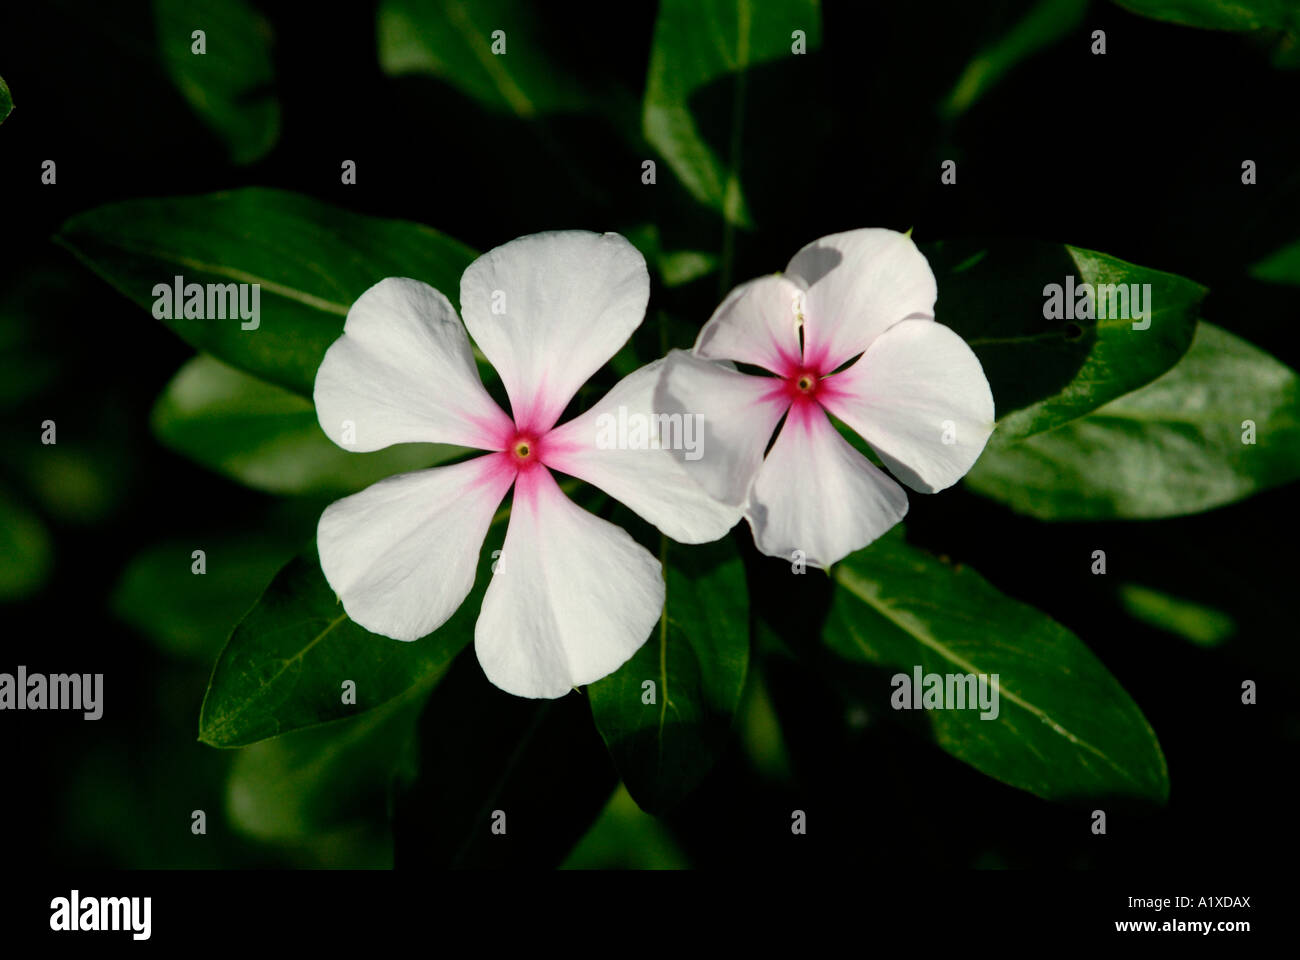 Madagascar rosy periwinkle flowers Stock Photo